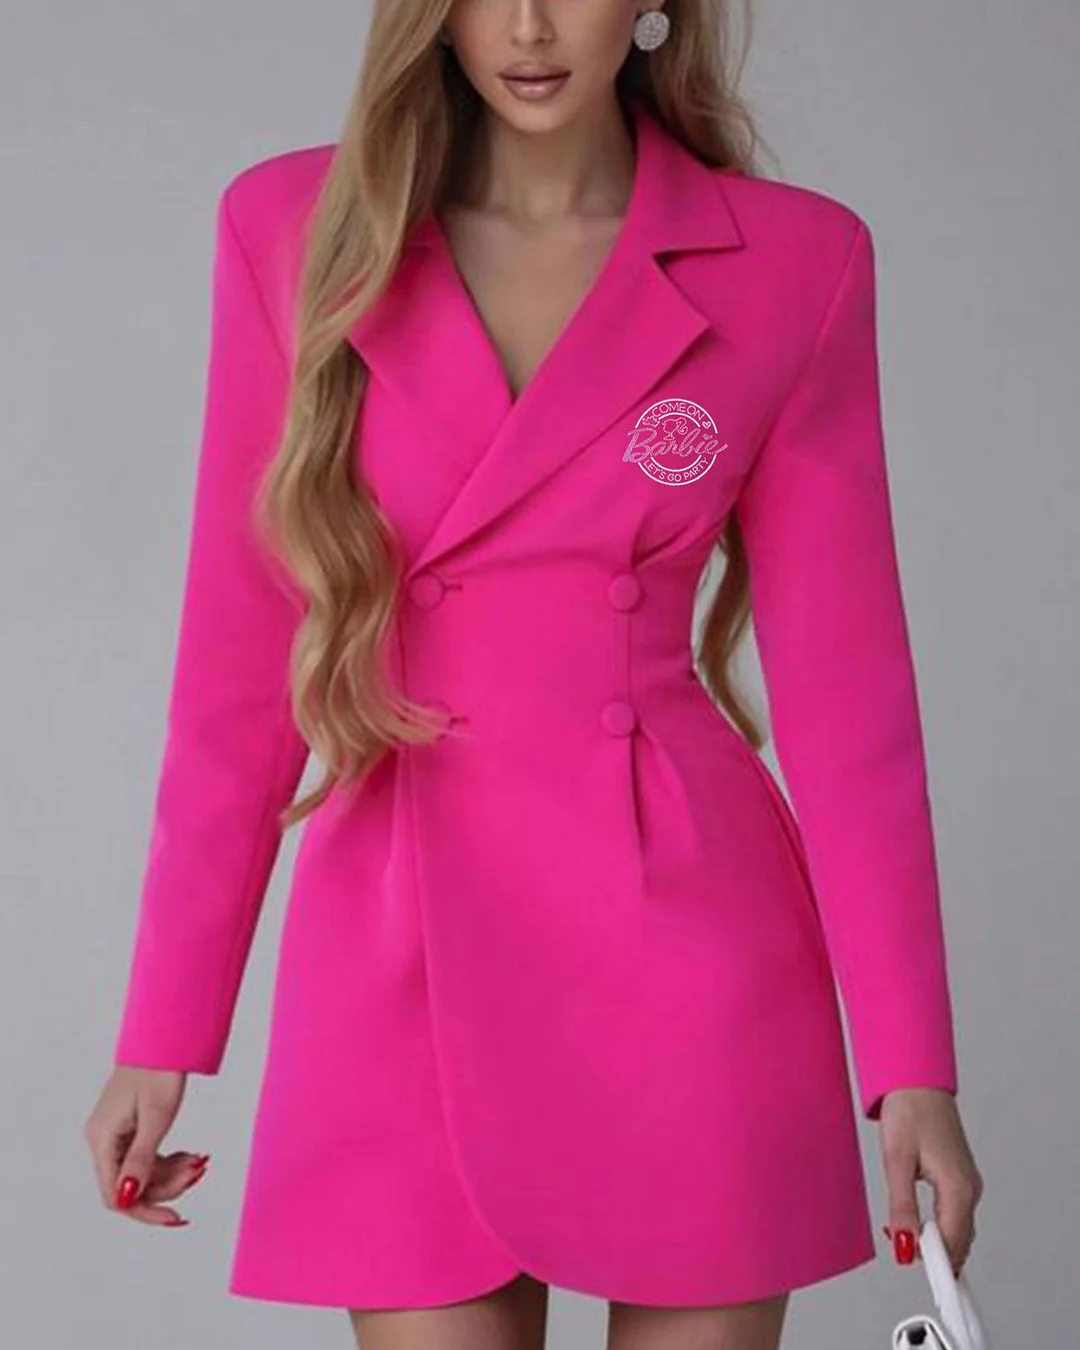  Barbie Girl Rhinestones Jacket Dress